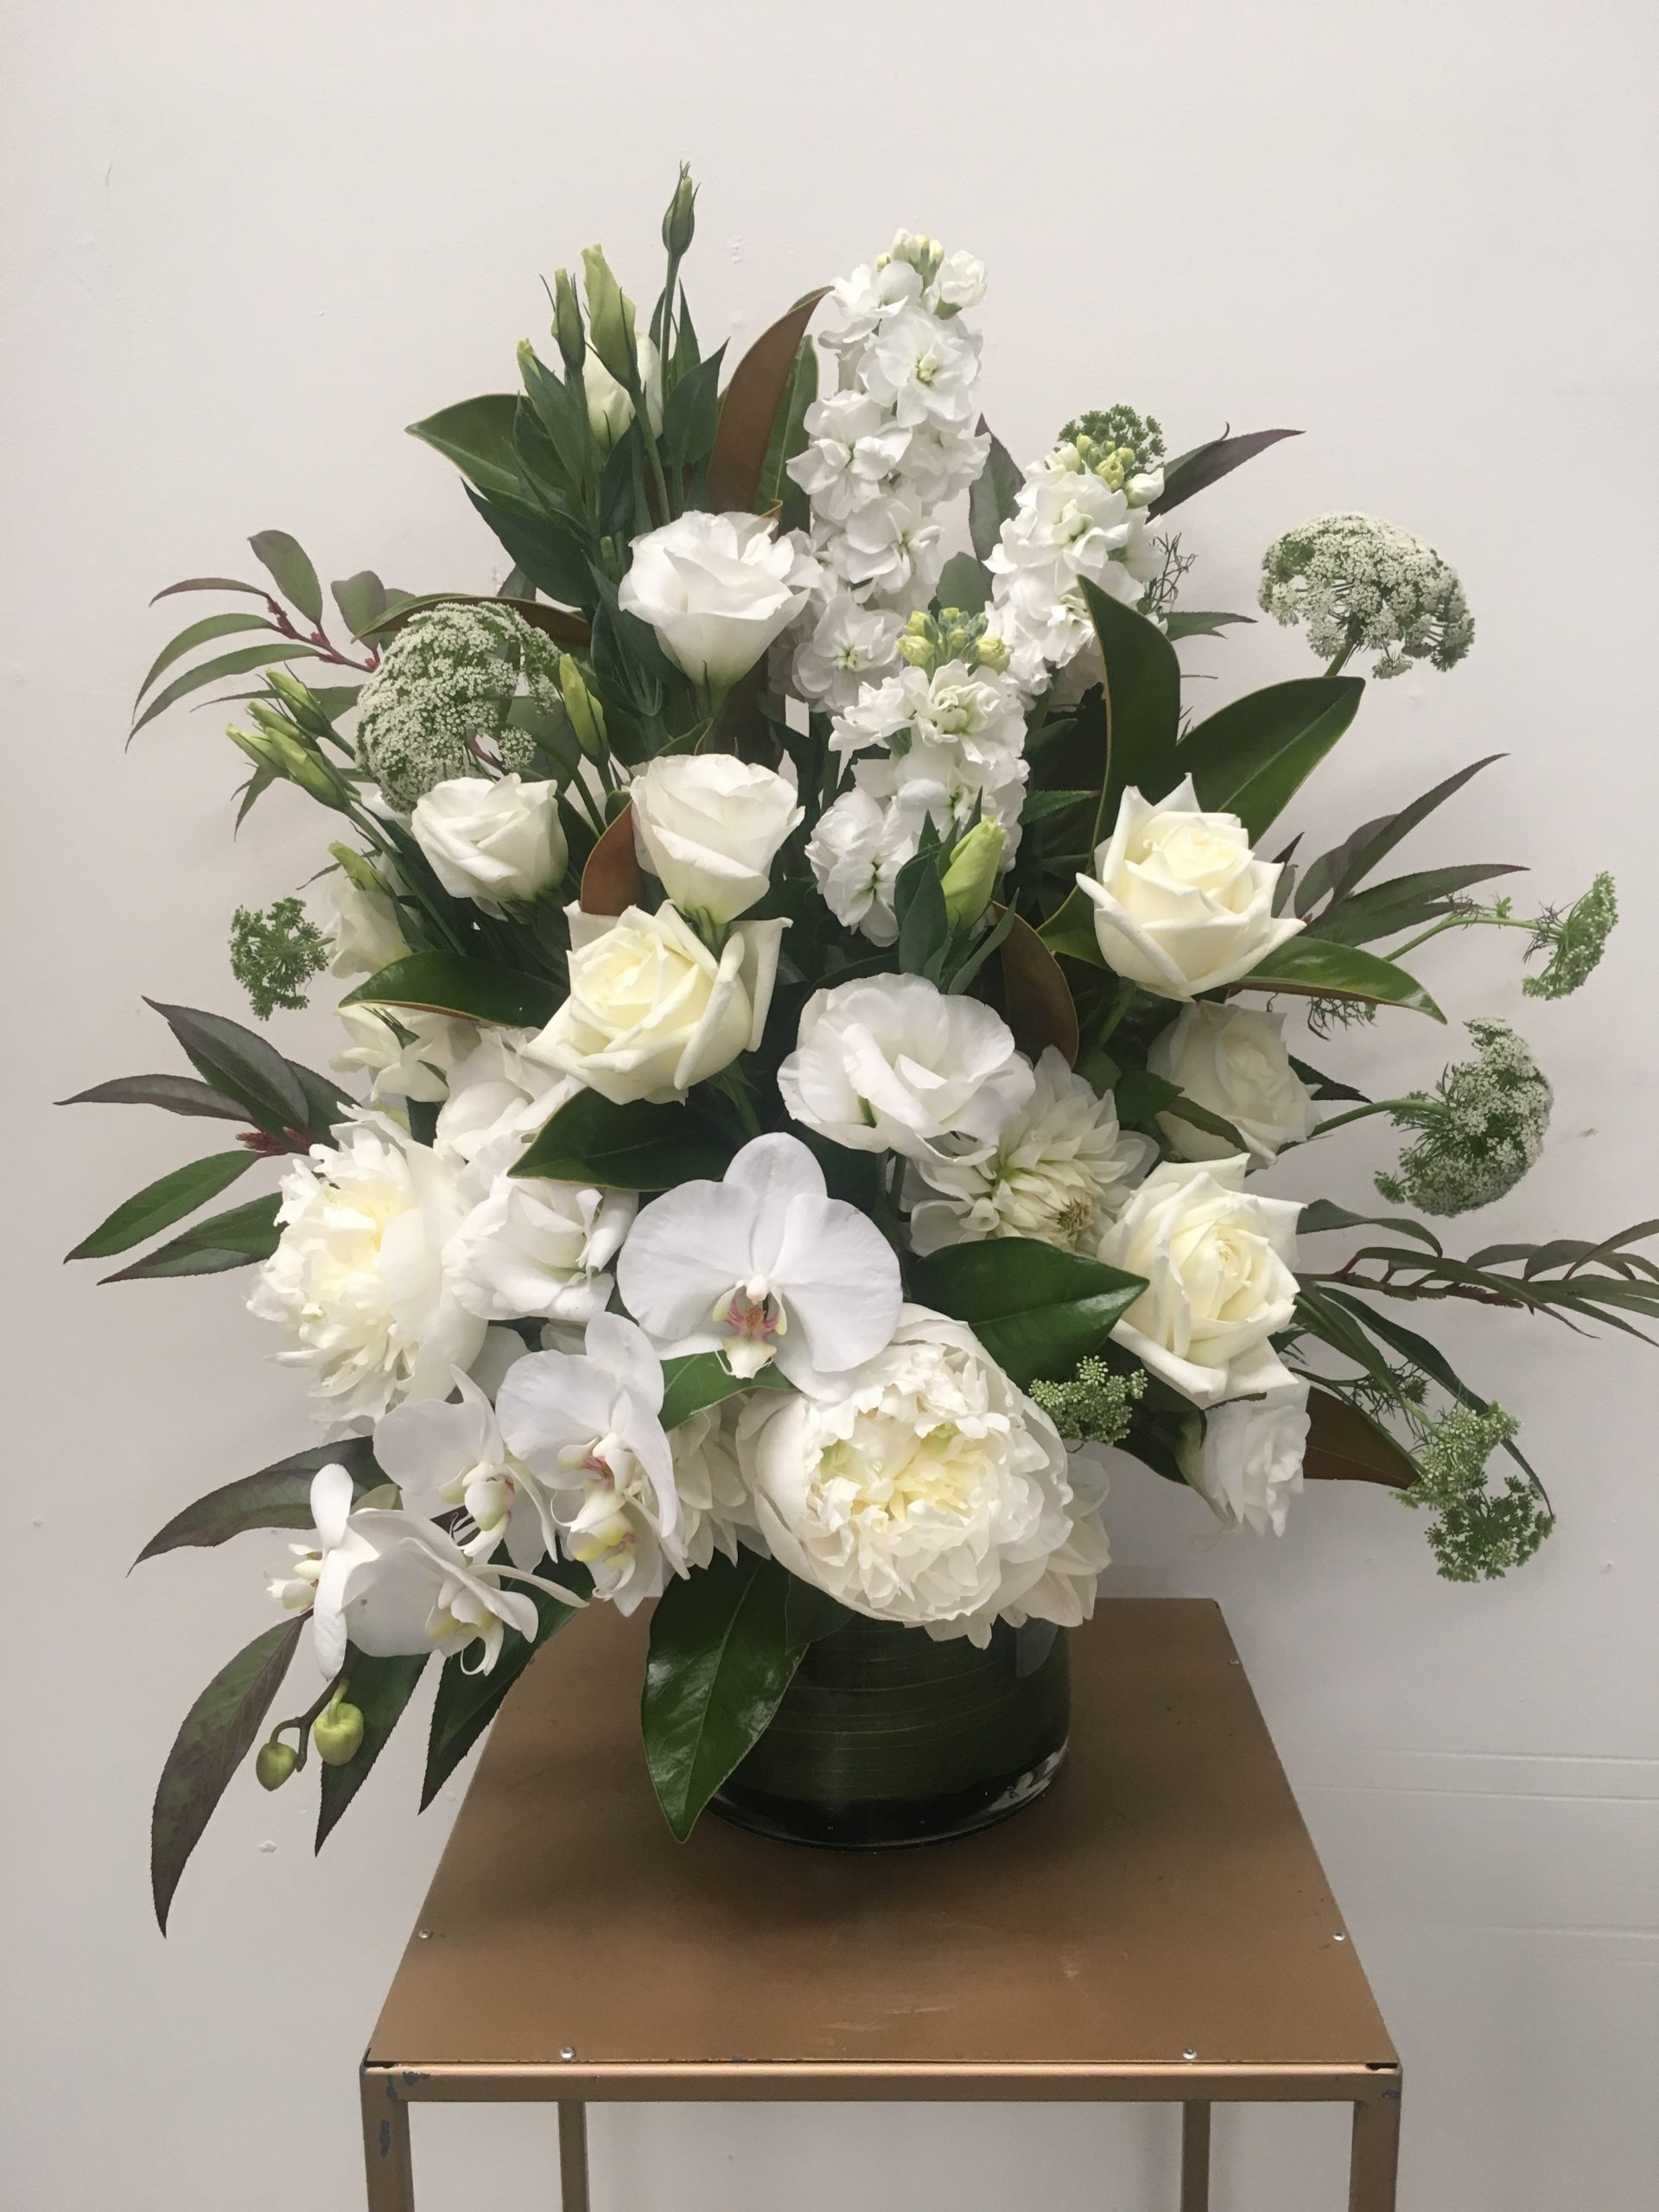 Geelong Wedding Flowers - Bridal Florist - Judy Chirnside Flowers